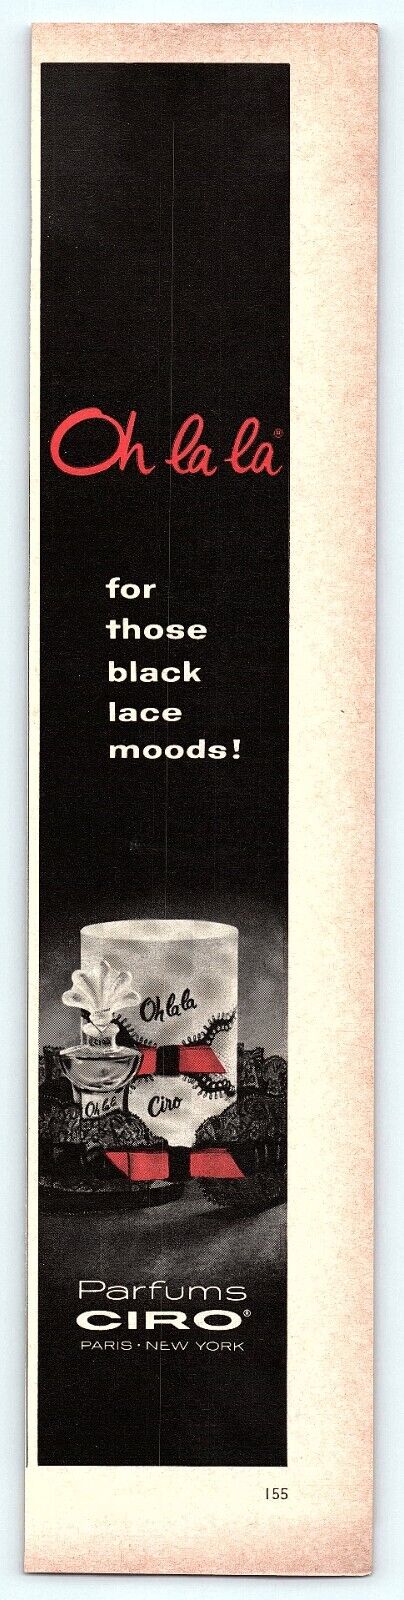 Vogue 1965 Print Ad Ciro Perfums Oh LA LA Black Lace Moods 2.5 x 12.5 Home Decor